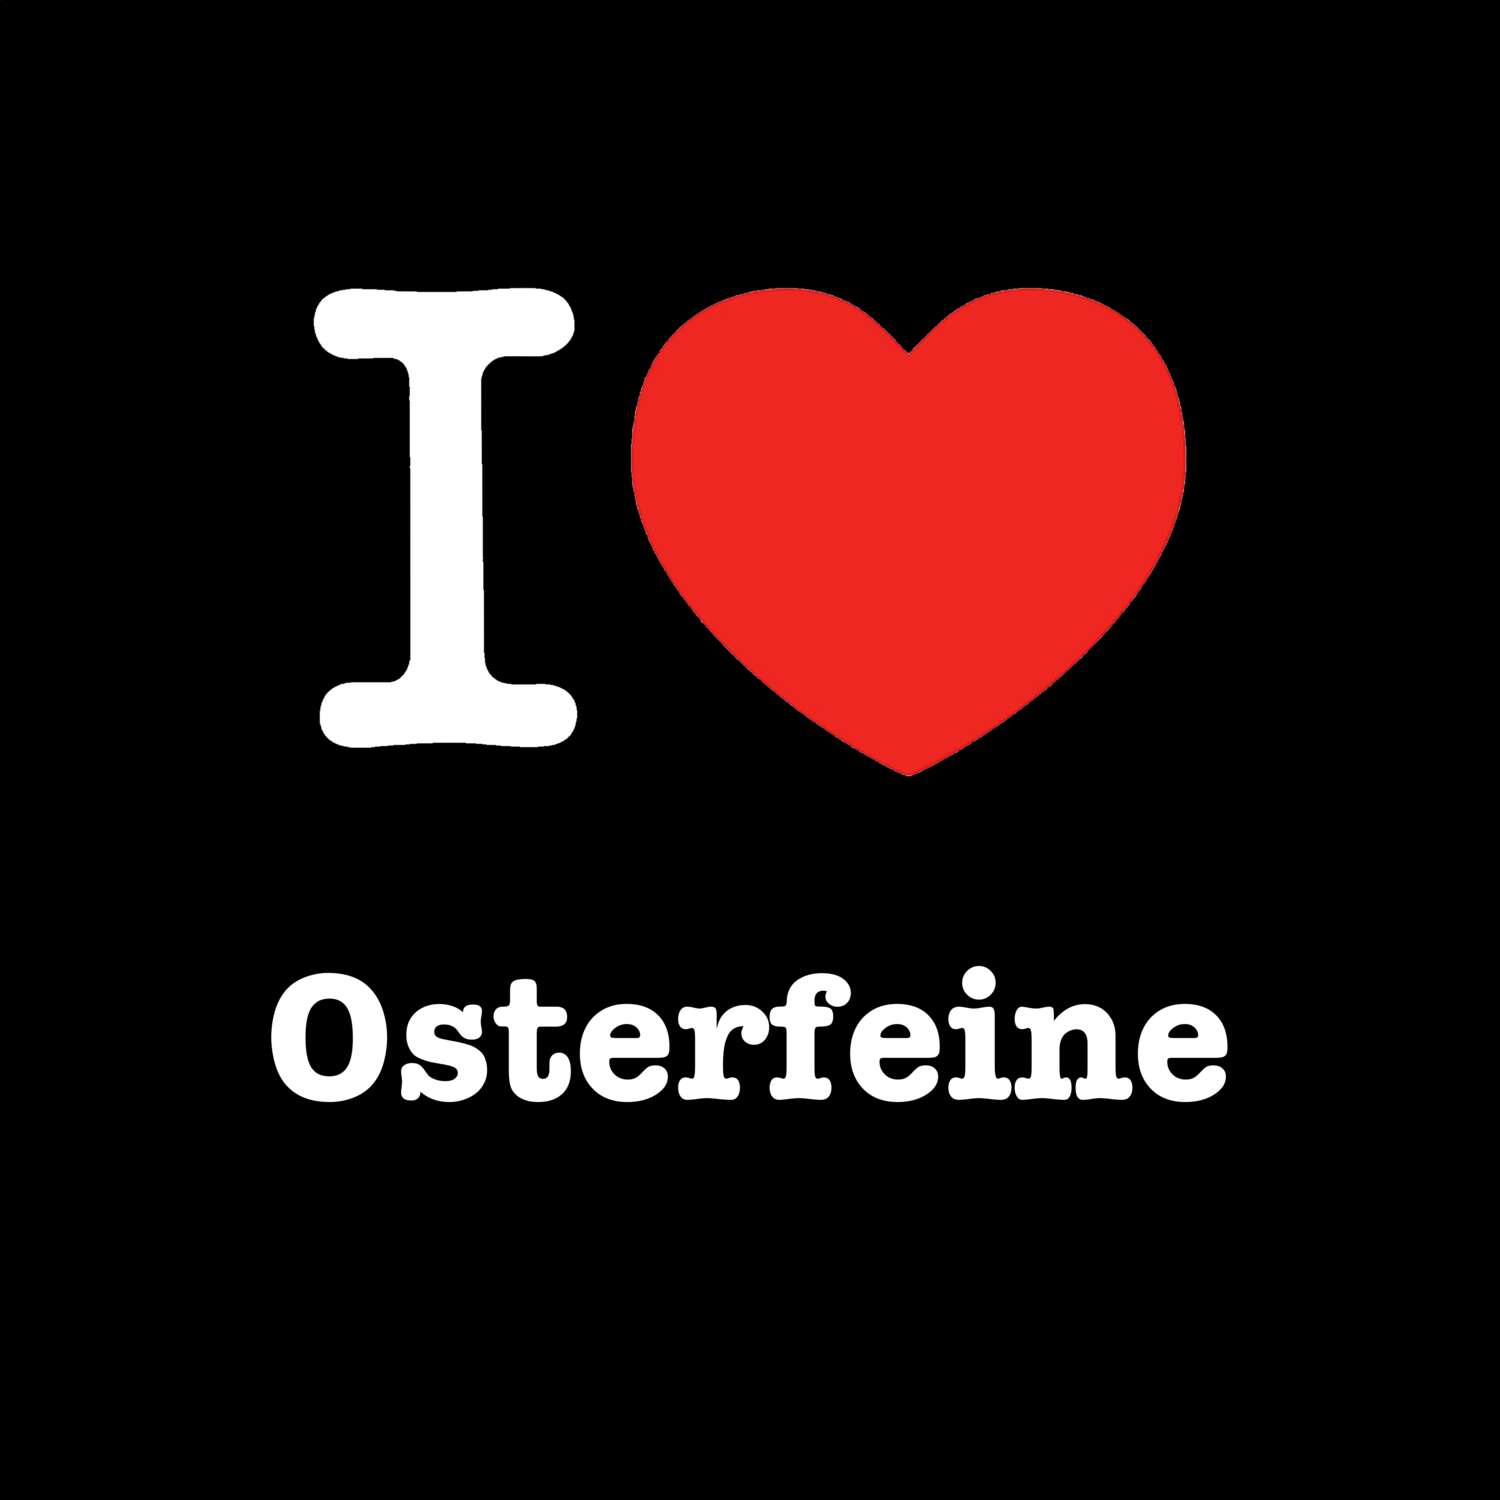 Osterfeine T-Shirt »I love«